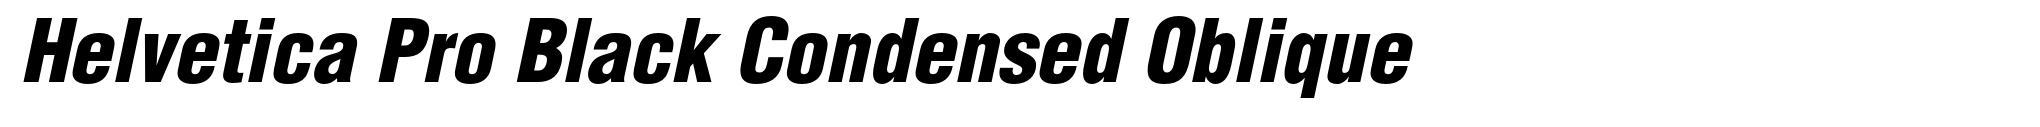 Helvetica Pro Black Condensed Oblique image